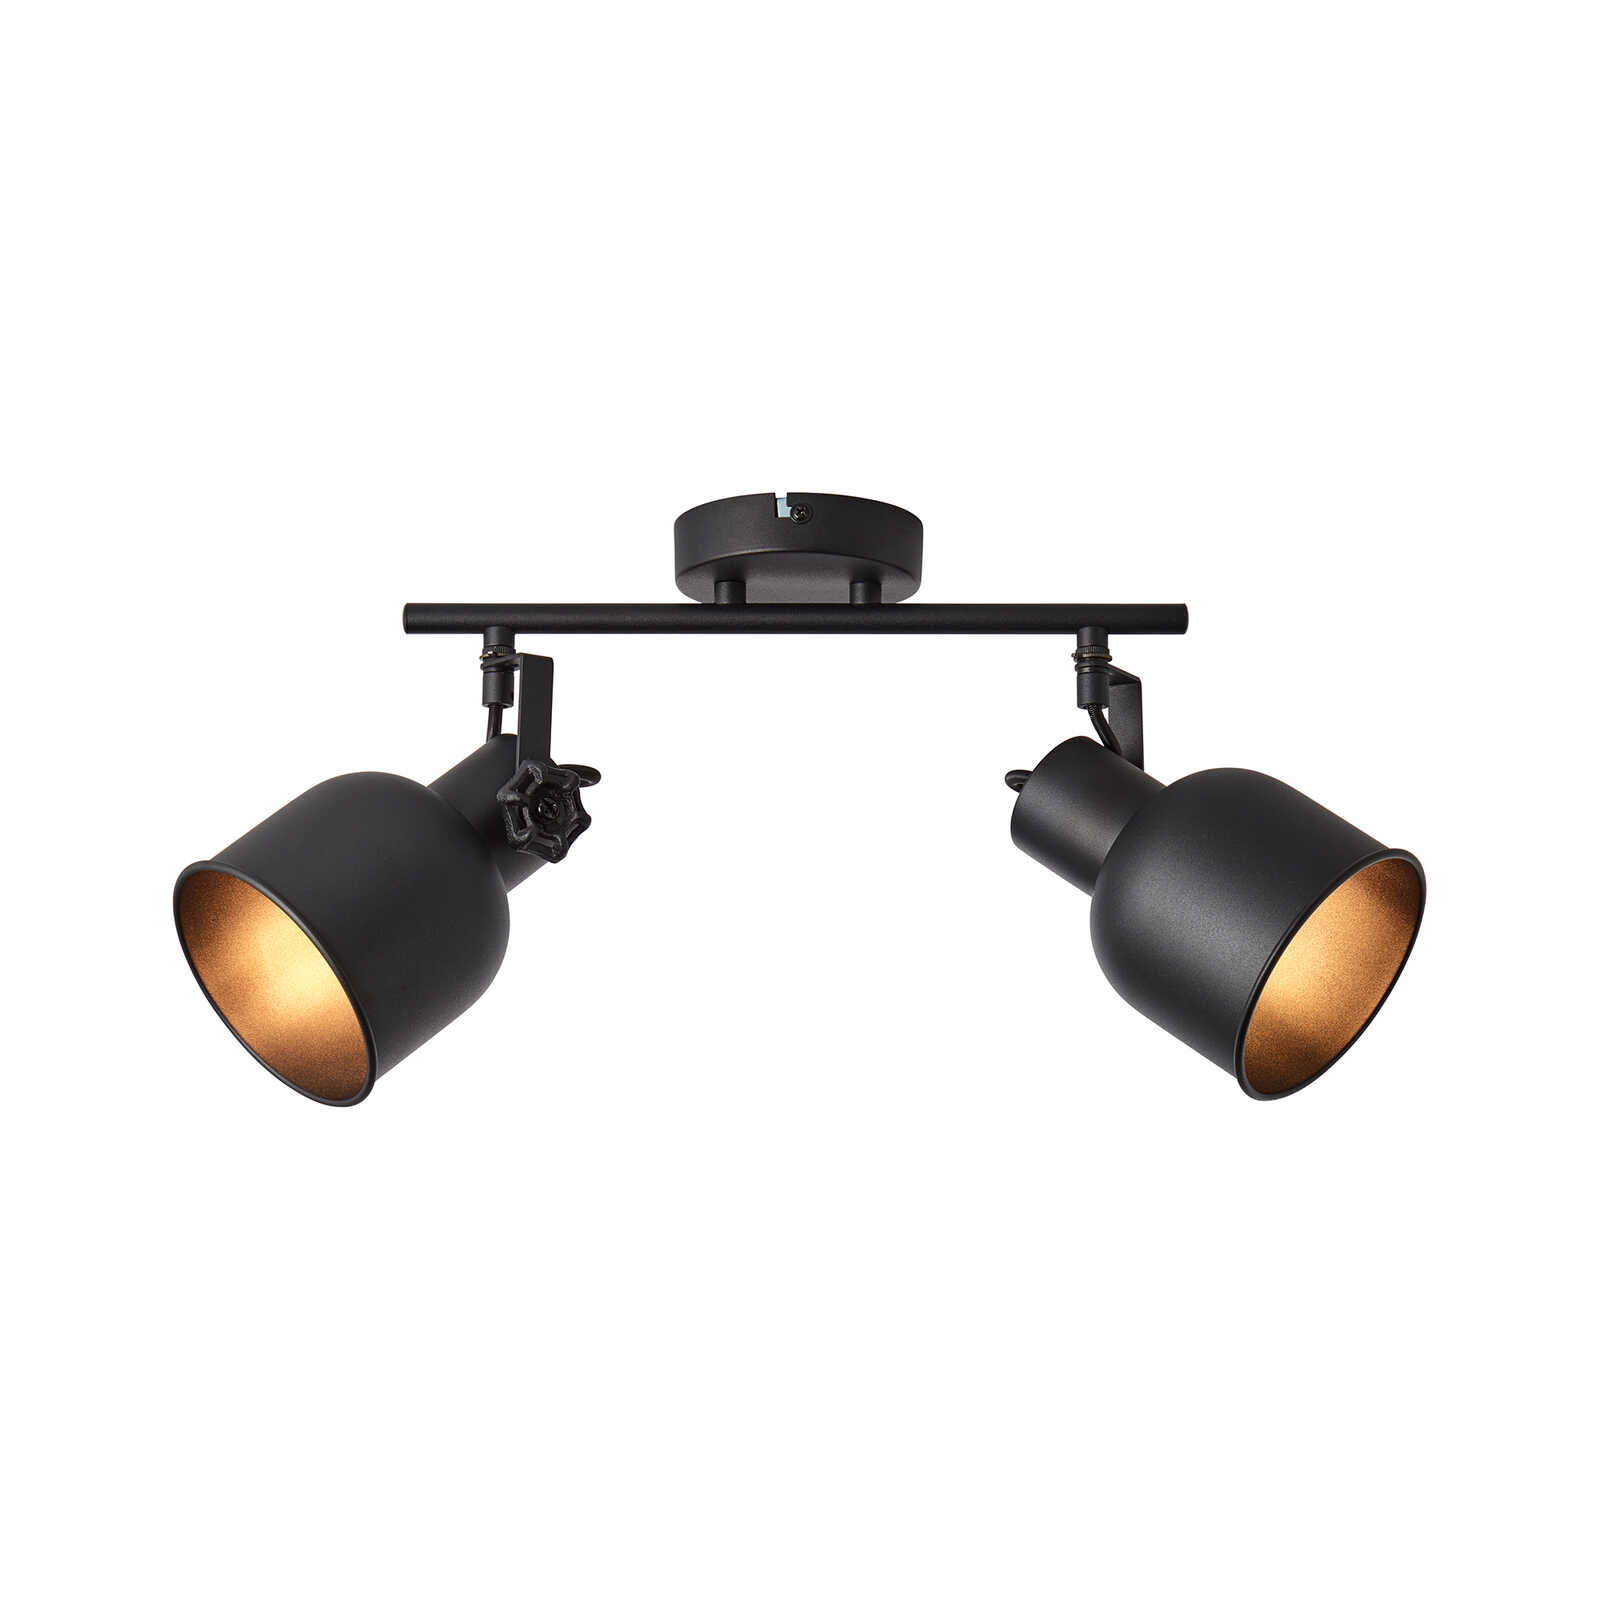 Metalen plafondlamp - Mia 3 - Zwart
